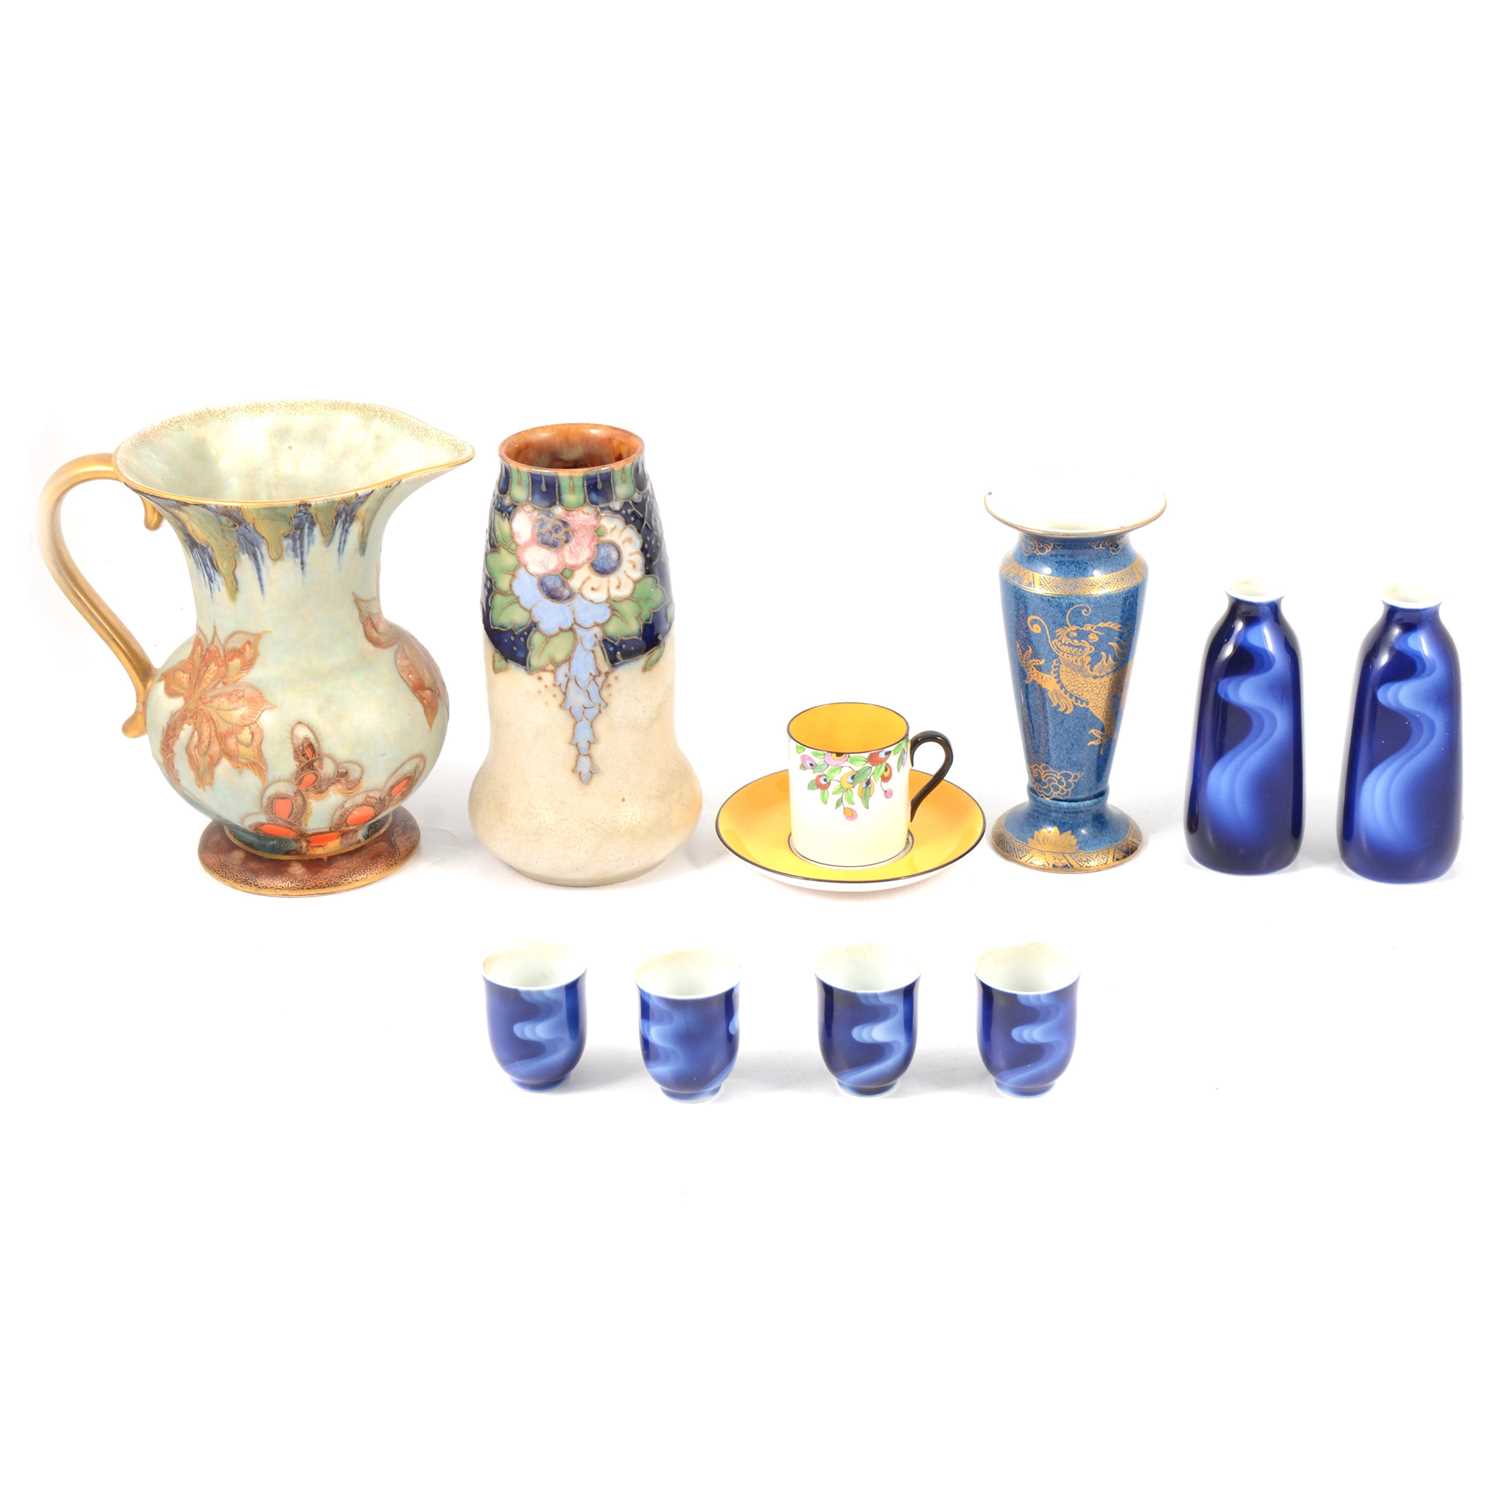 Lot 11 - Fieldings Crown Devon jug and other decorative ceramics